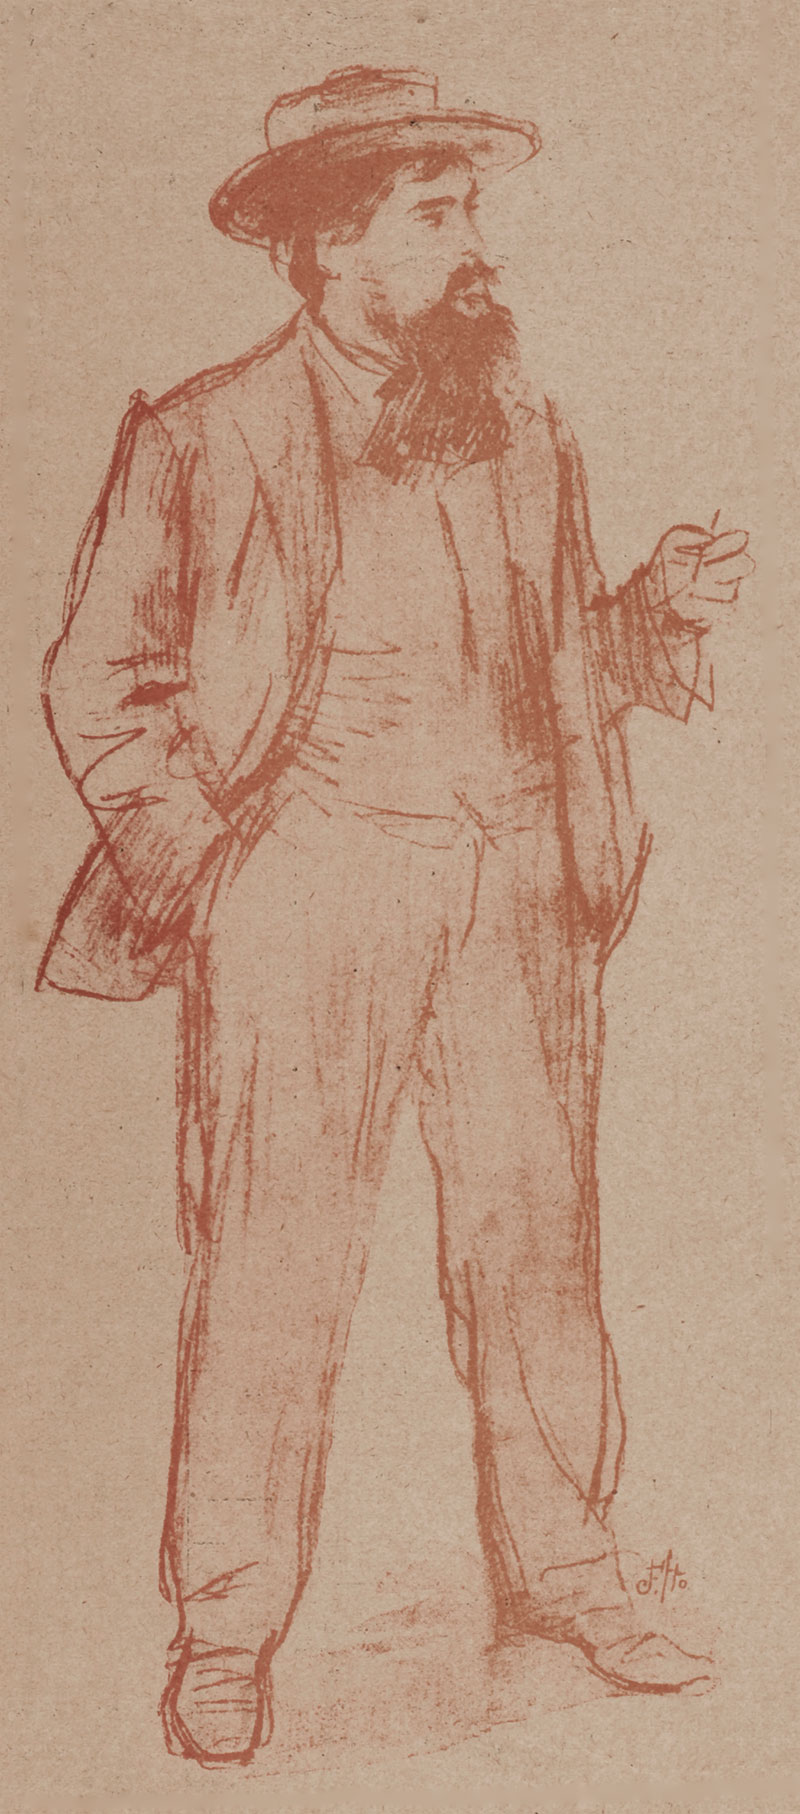  Retrat de Joan Brull per Ramon Casas, 1898